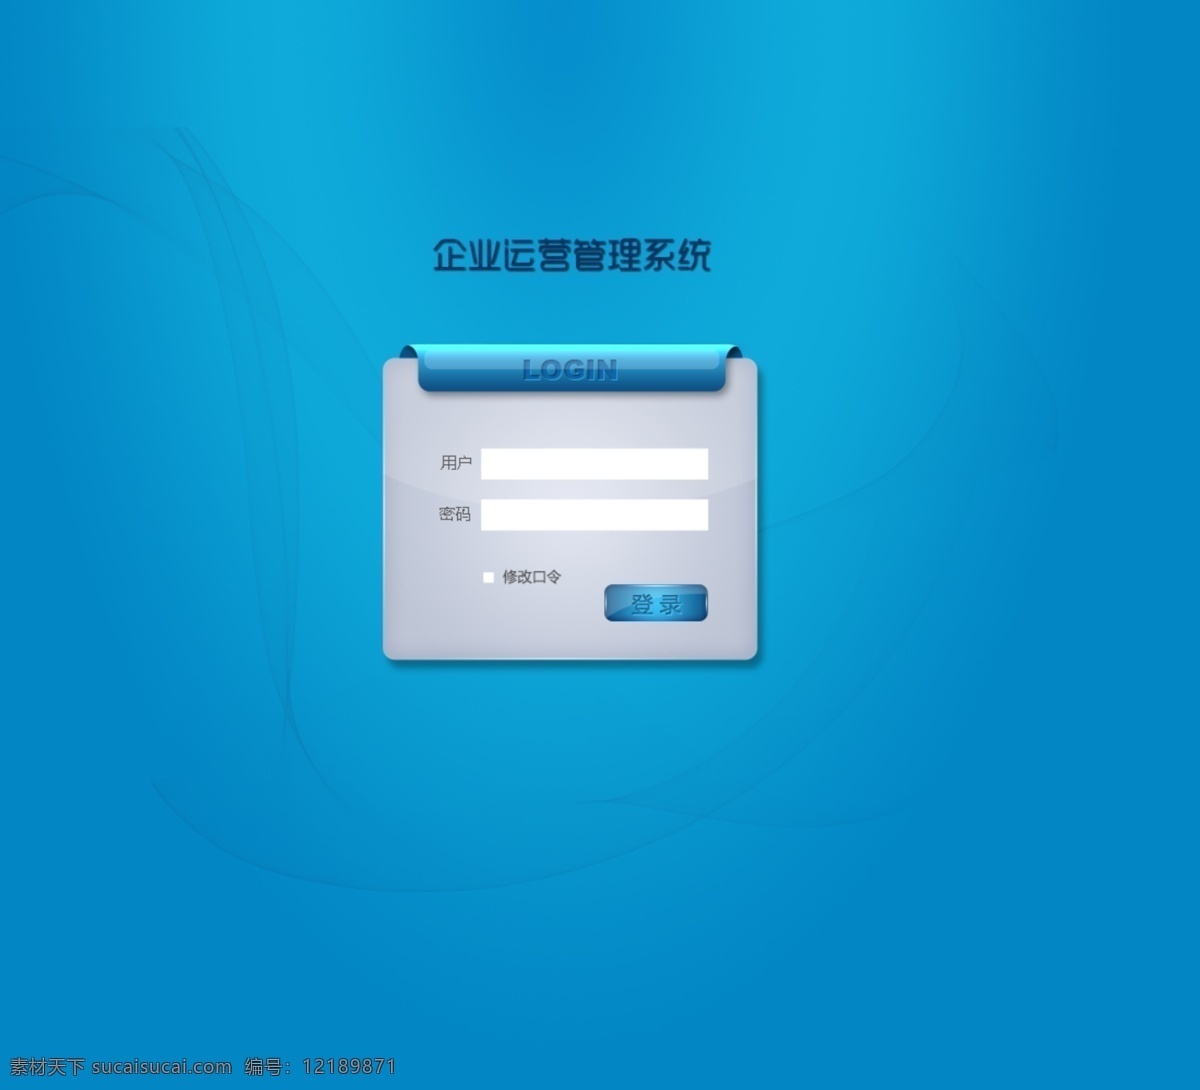 it 企业 登陆 界面 login 蓝色登陆页面 中文模版 网页模板 源文件